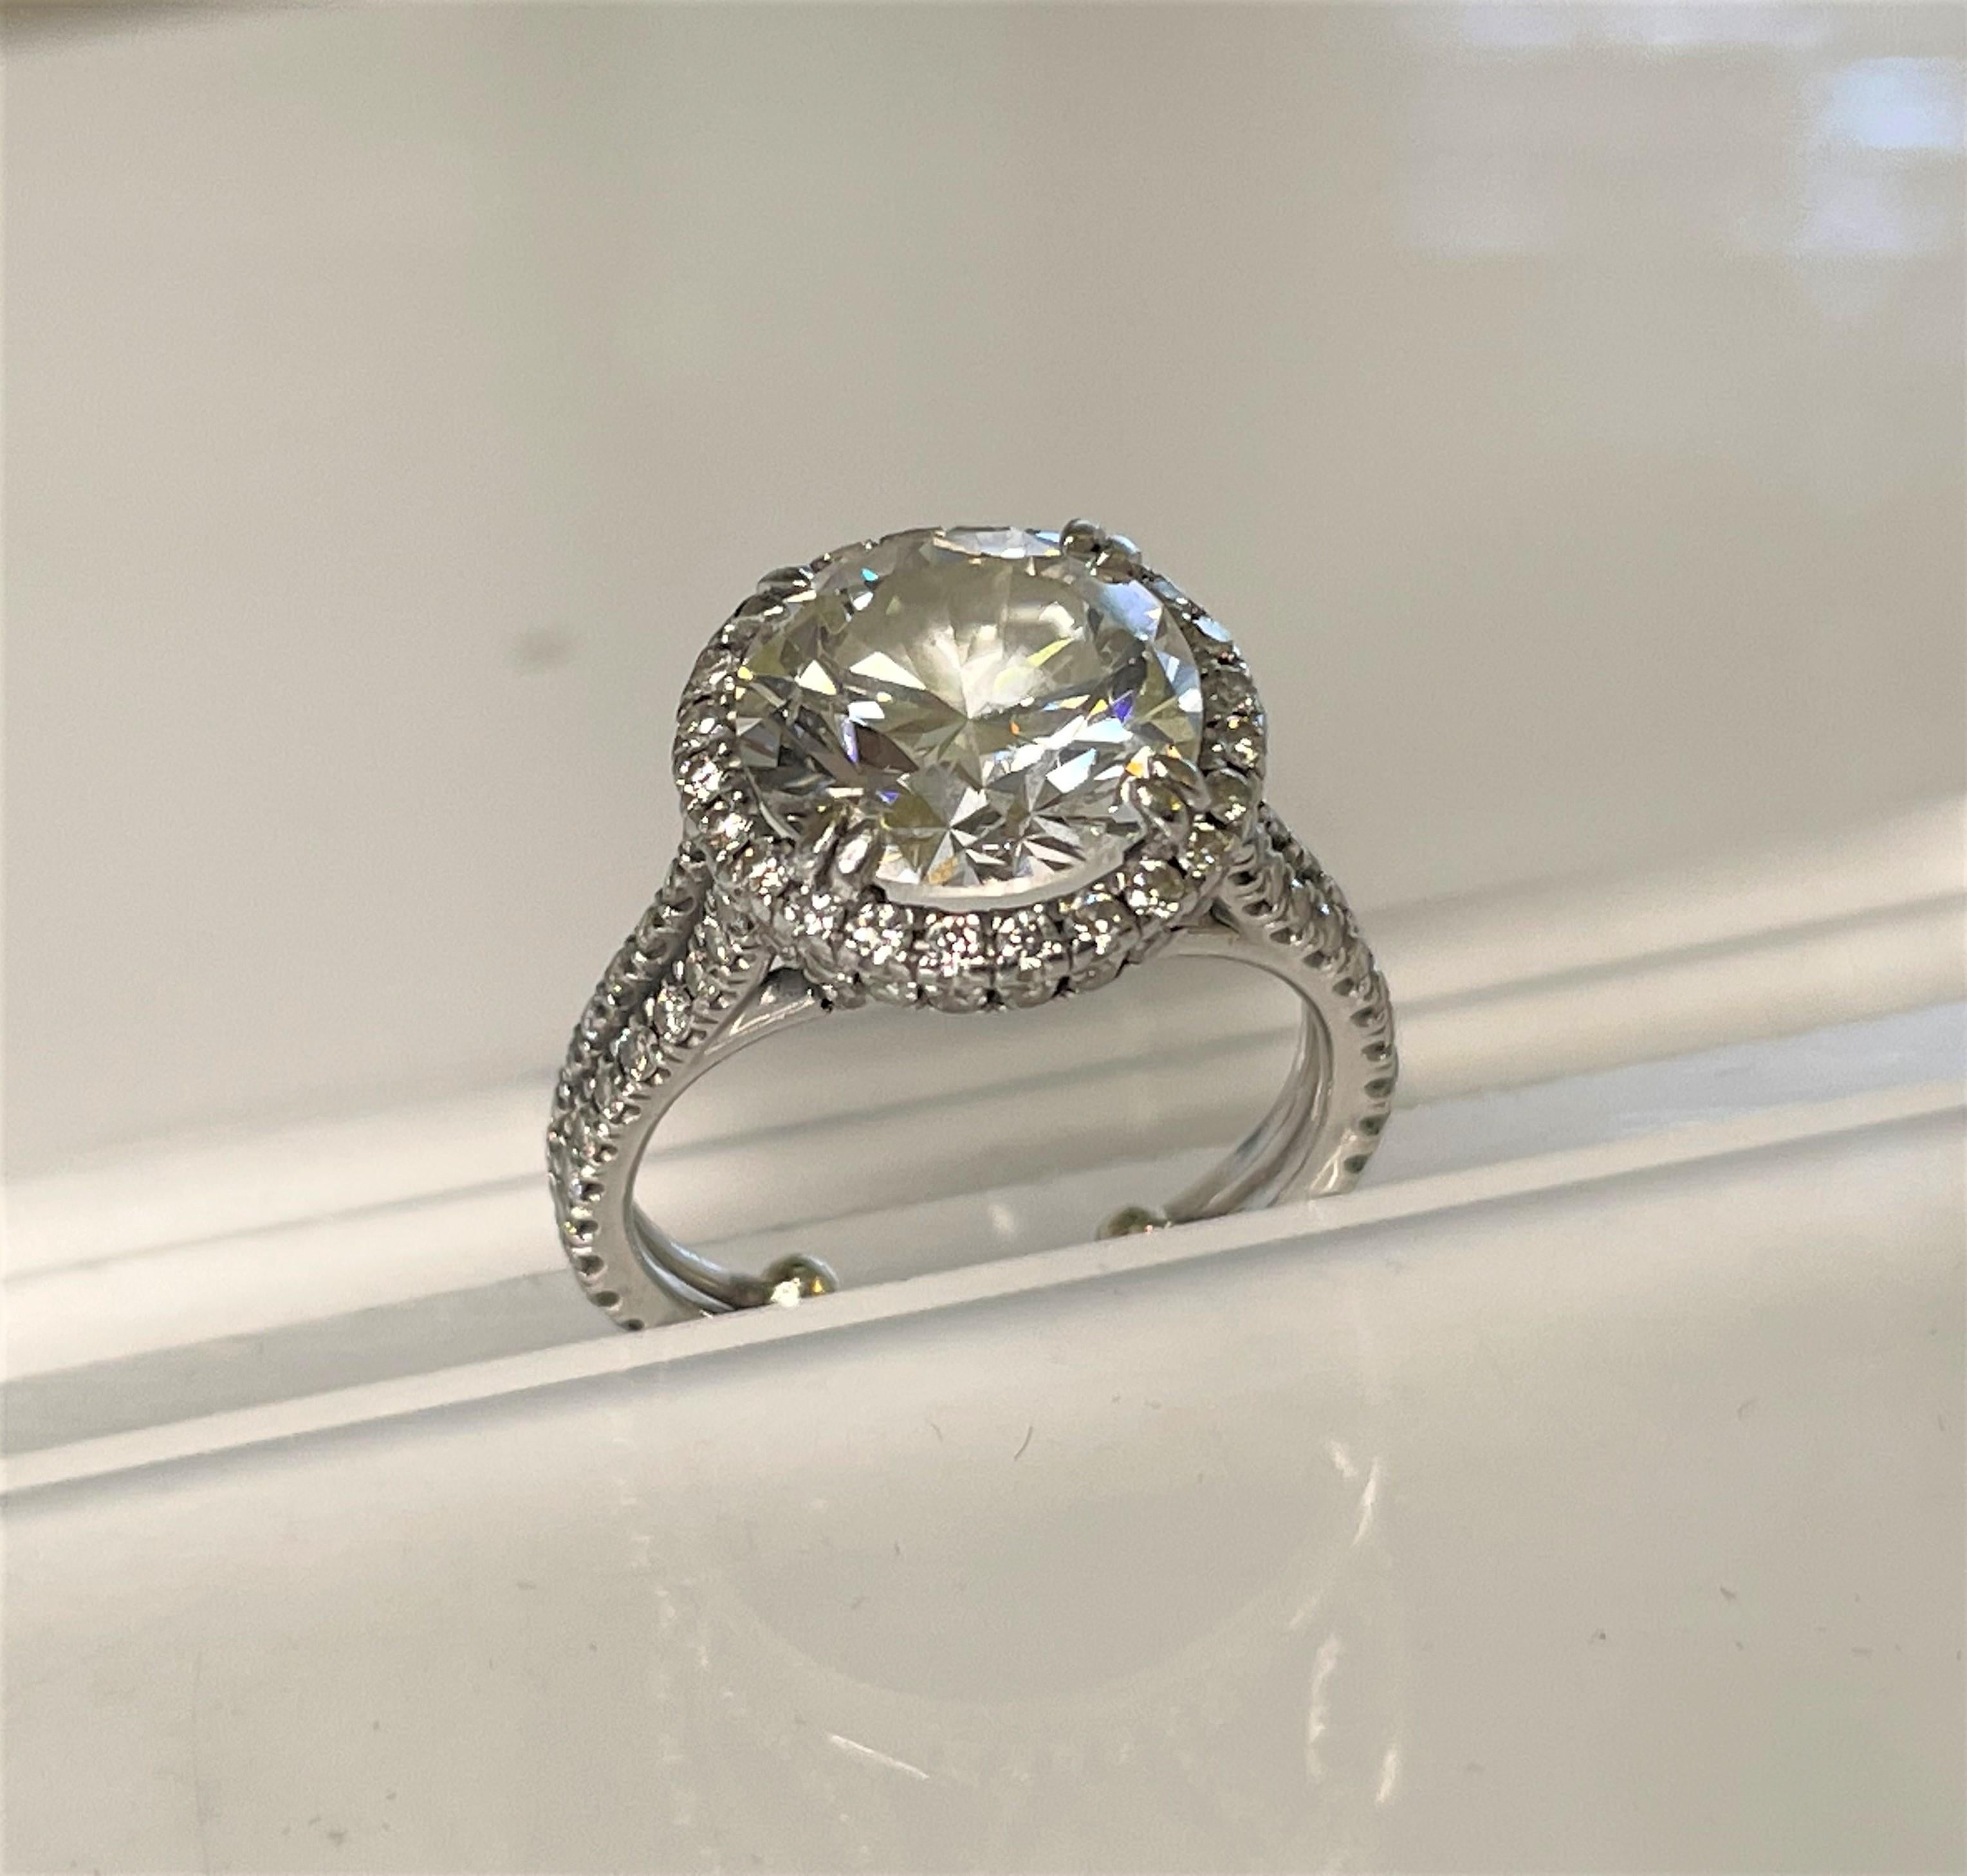 ibb cn 925 ring with diamonds